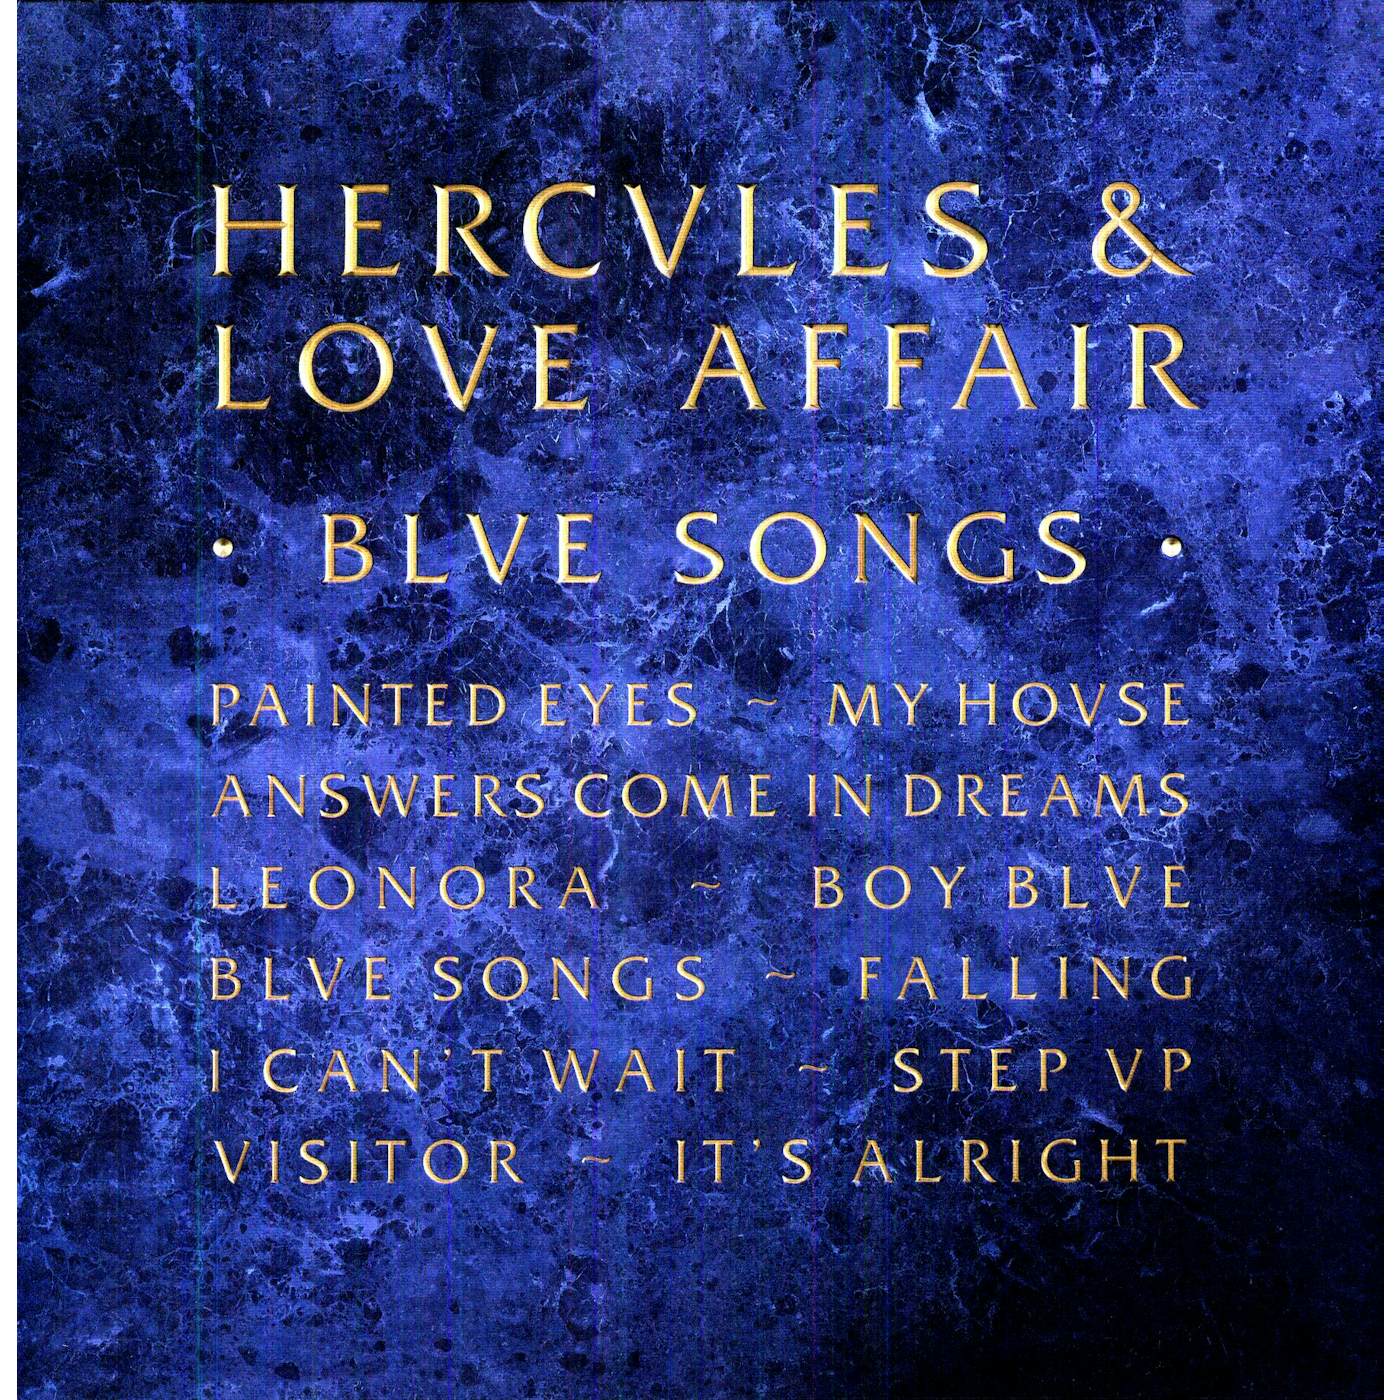 Hercules & Love Affair Blue Songs Vinyl Record